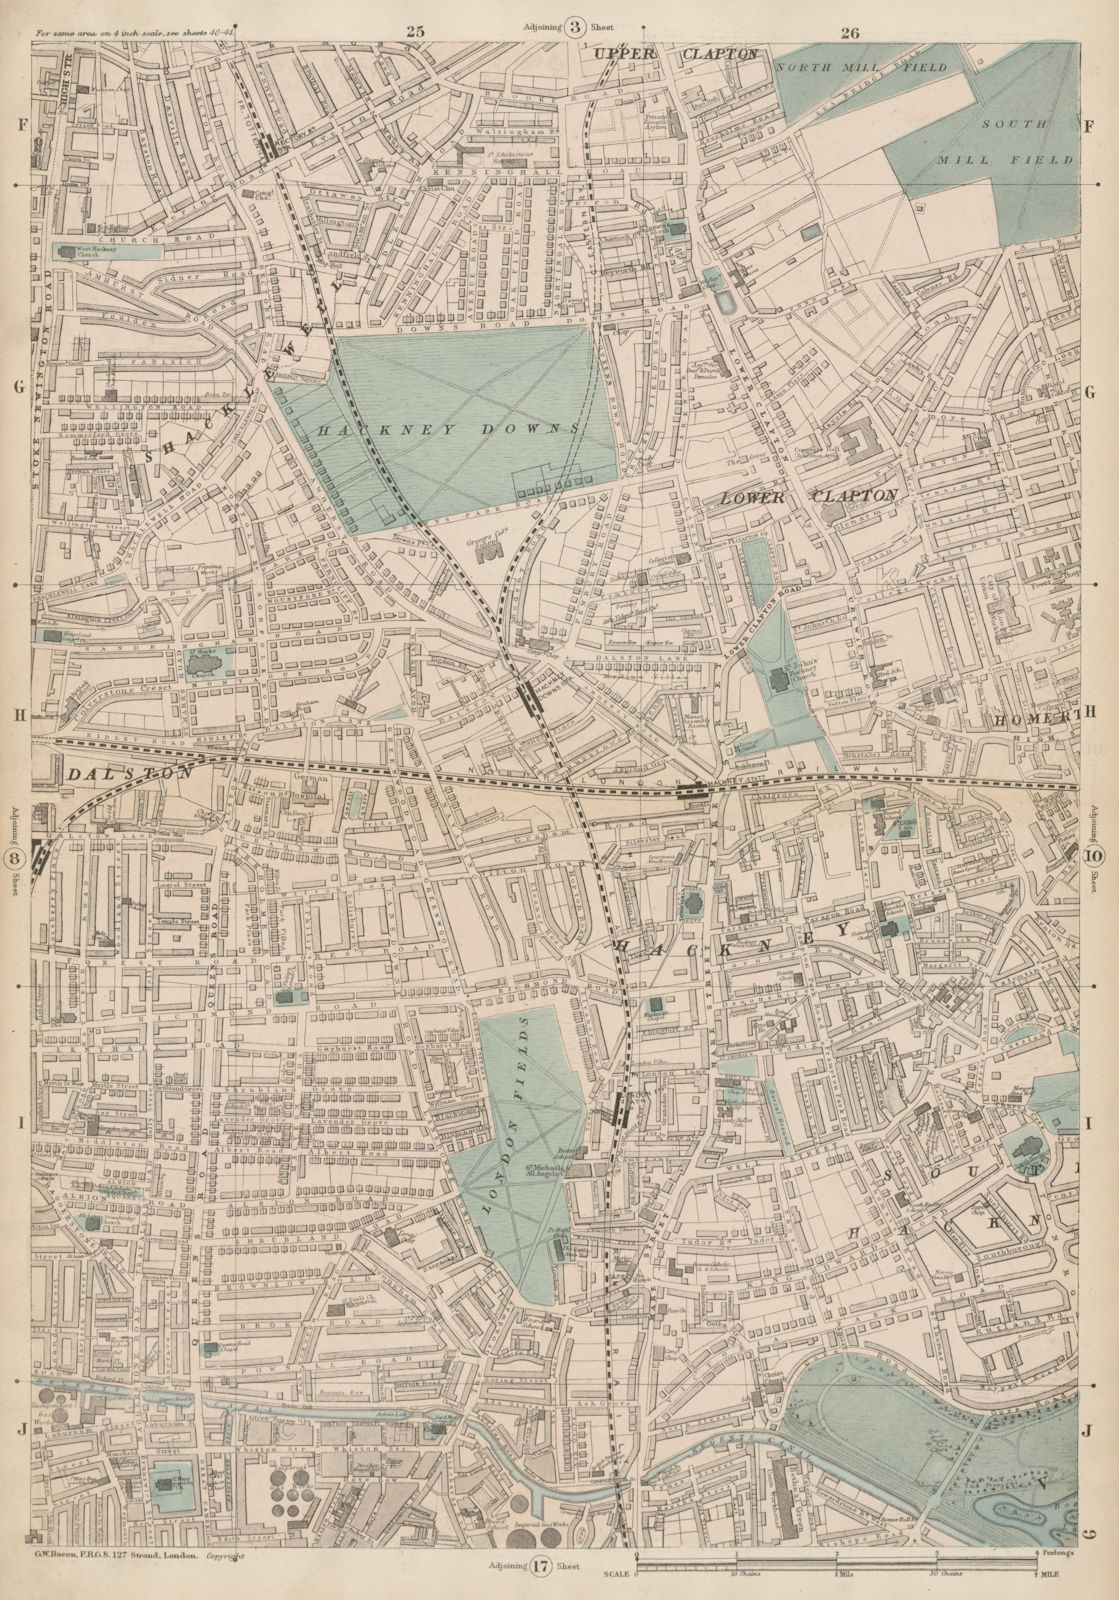 HACKNEY Lower Clapton Dalston Shacklewell London Fields Homerton c1887 old map